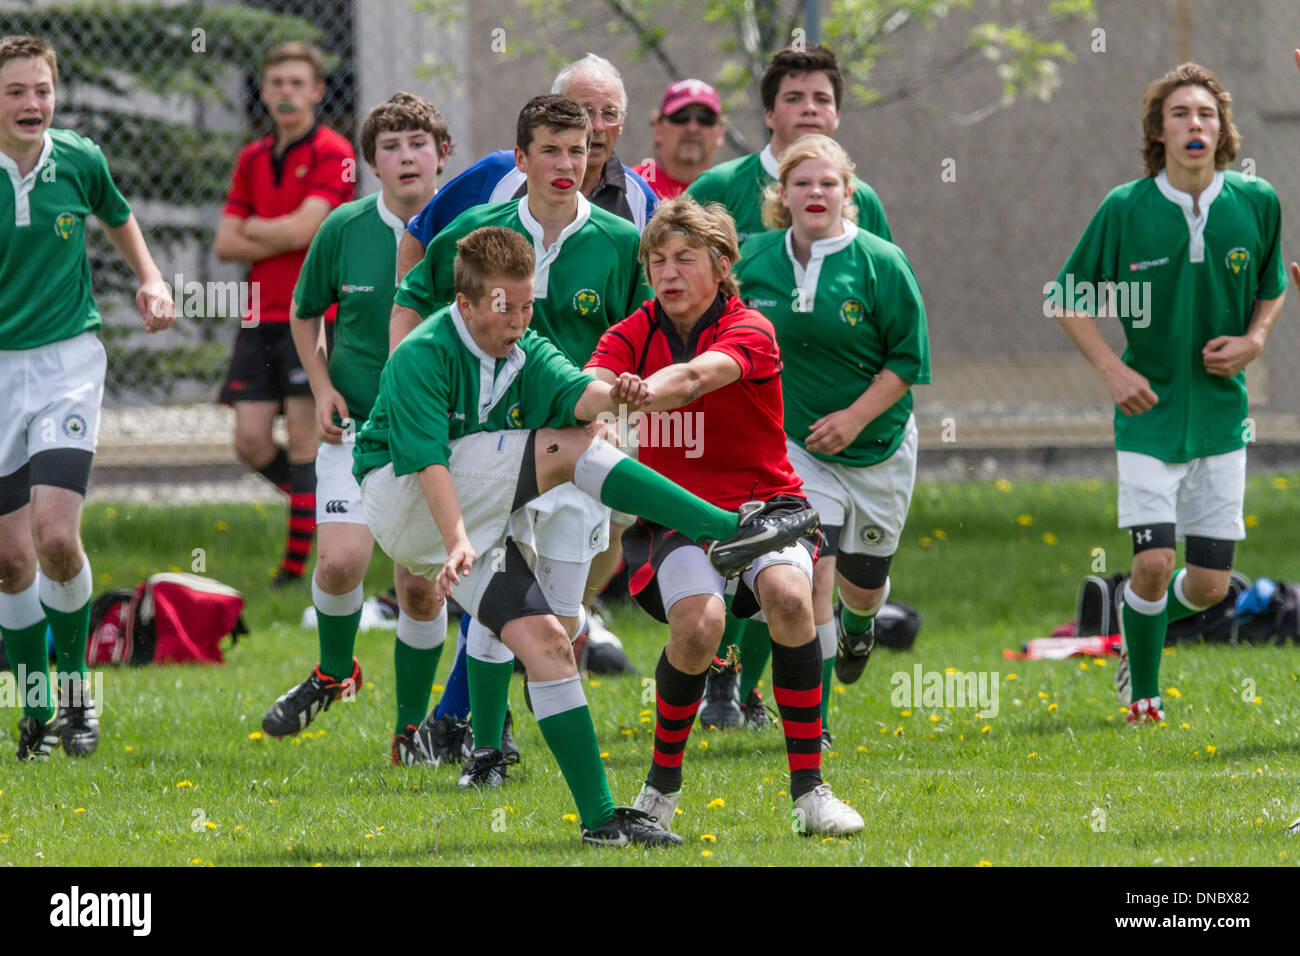 Garçons jouant des sports athlétiques, high school football rugby Banque D'Images